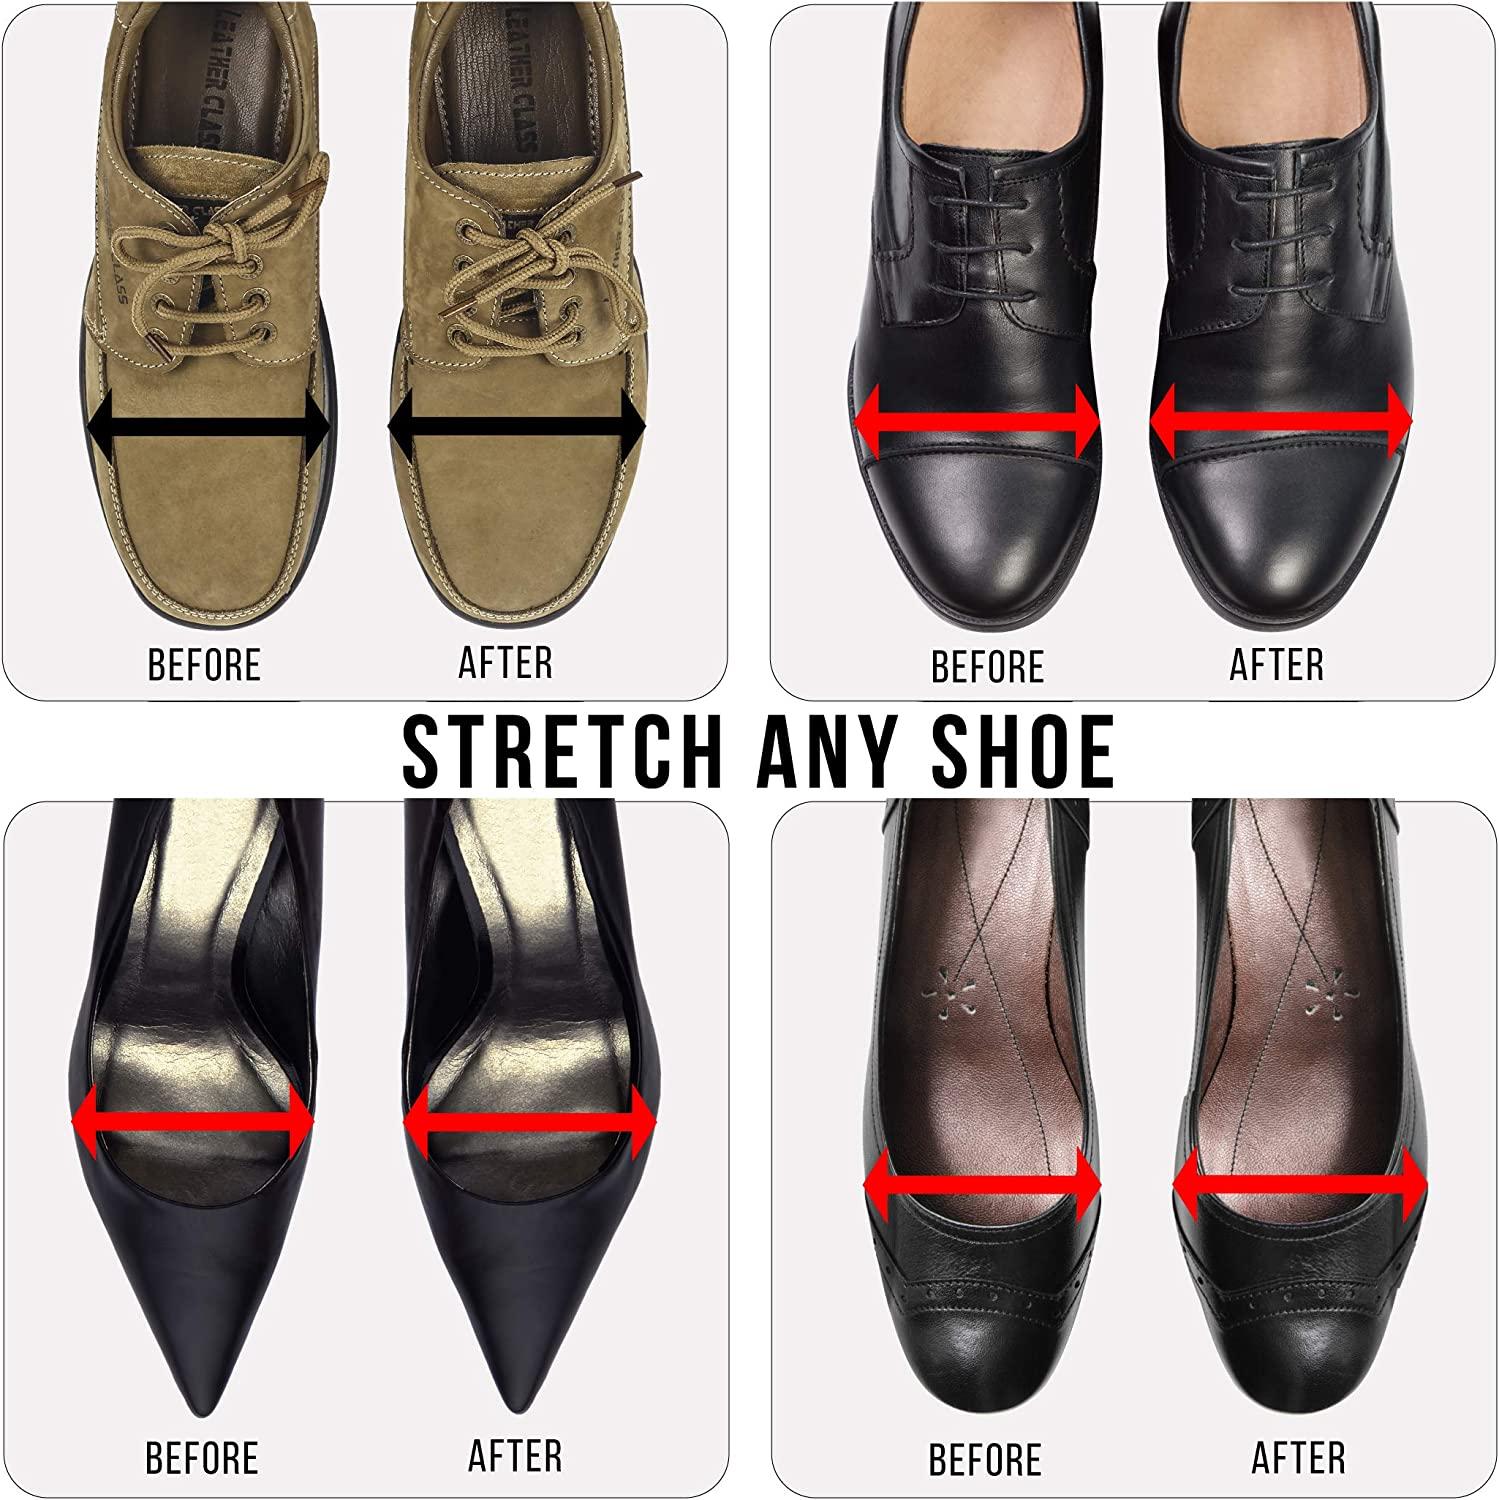 How to Make a Homemade Shoe Stretcher | Red high heel shoes, Fashion,  Homemade shoes